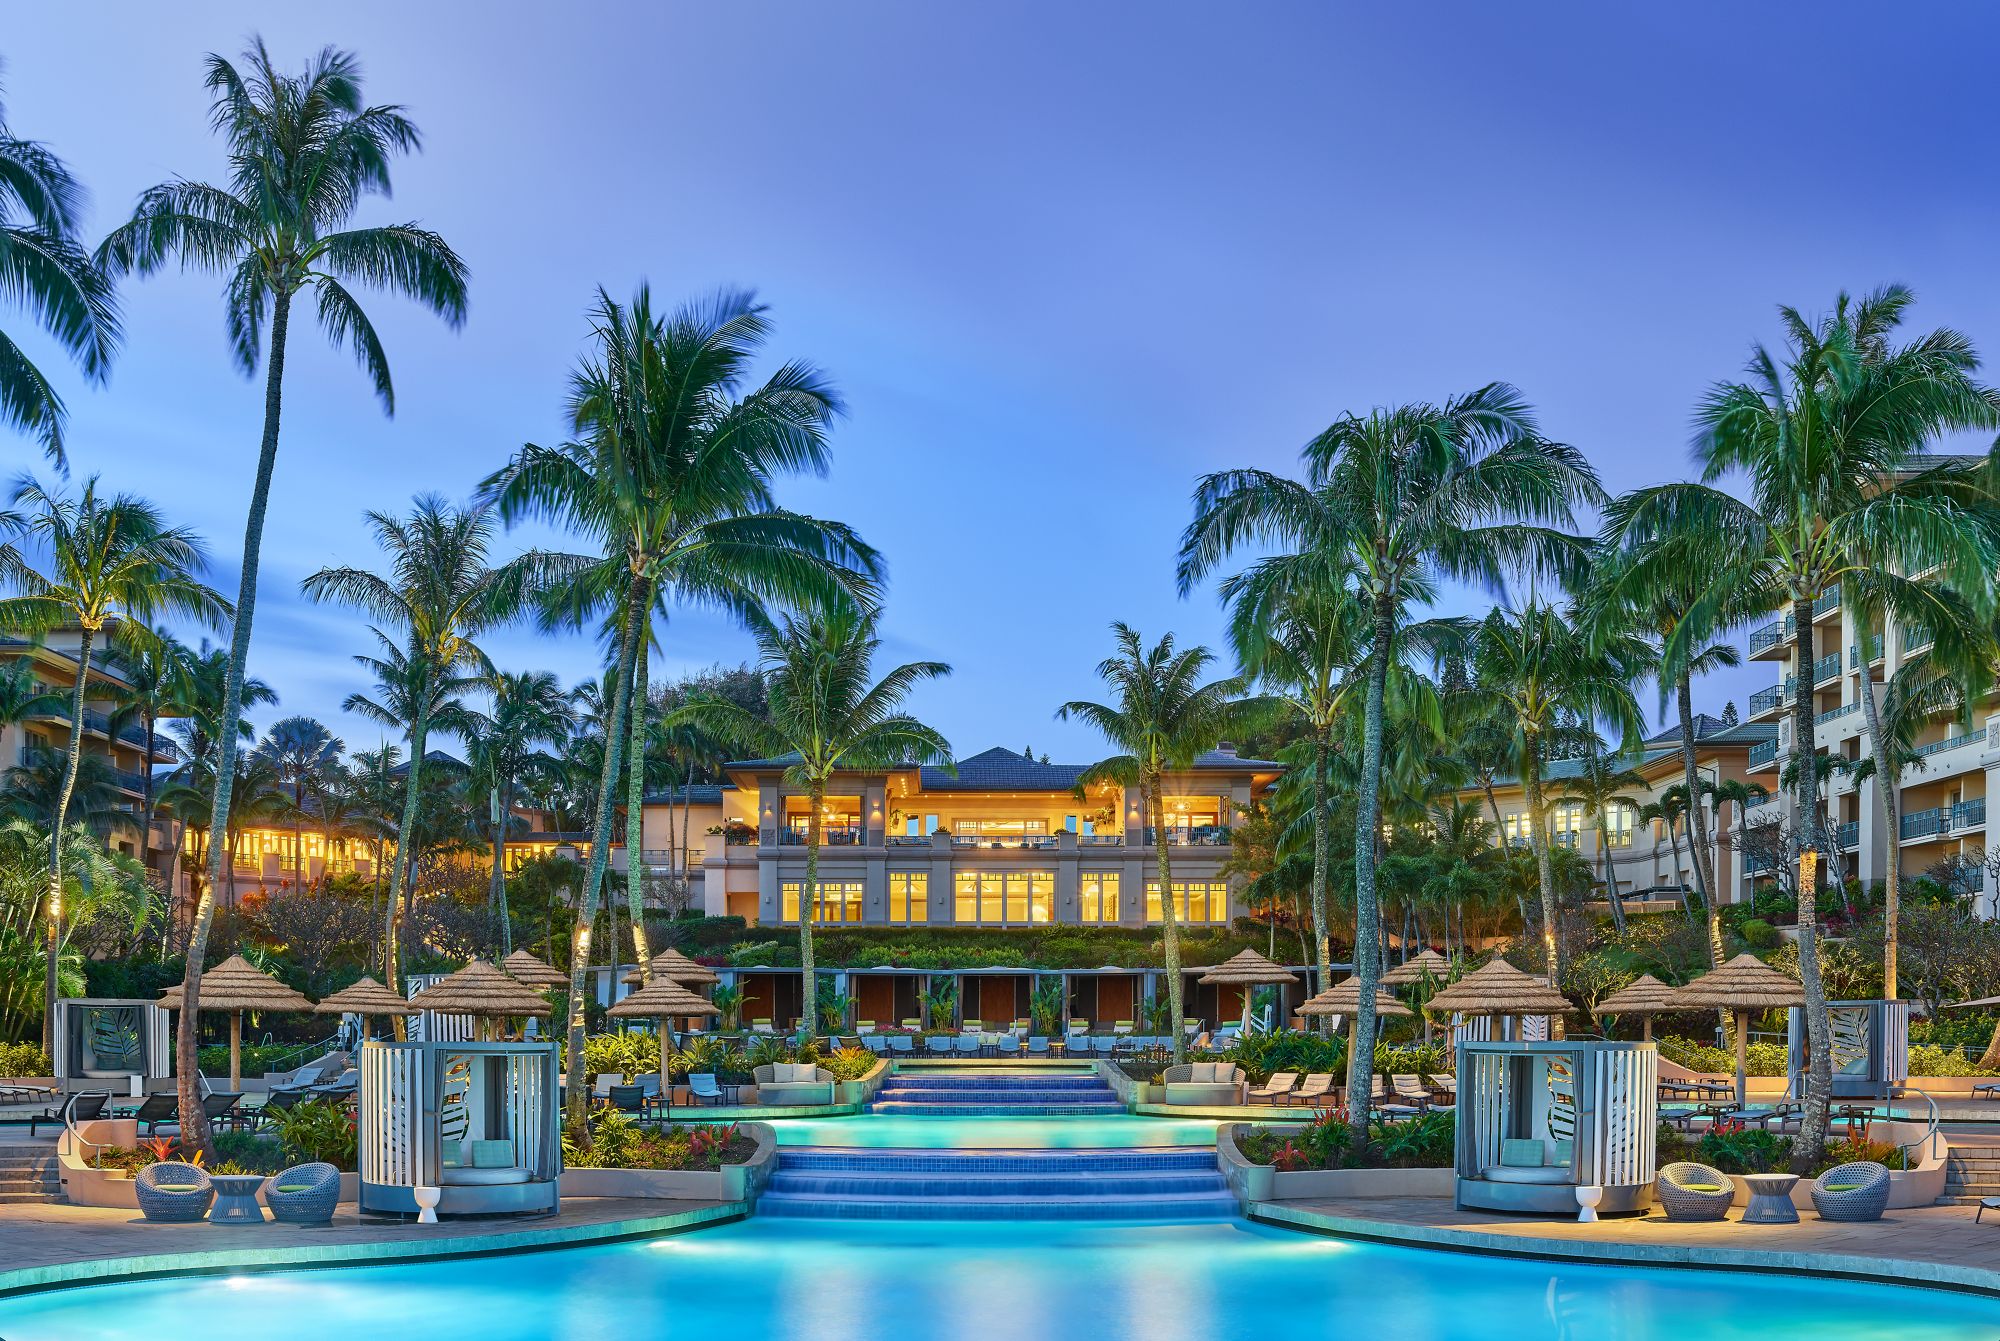 Ritz Carlton Maui resort pool on the west side of the island